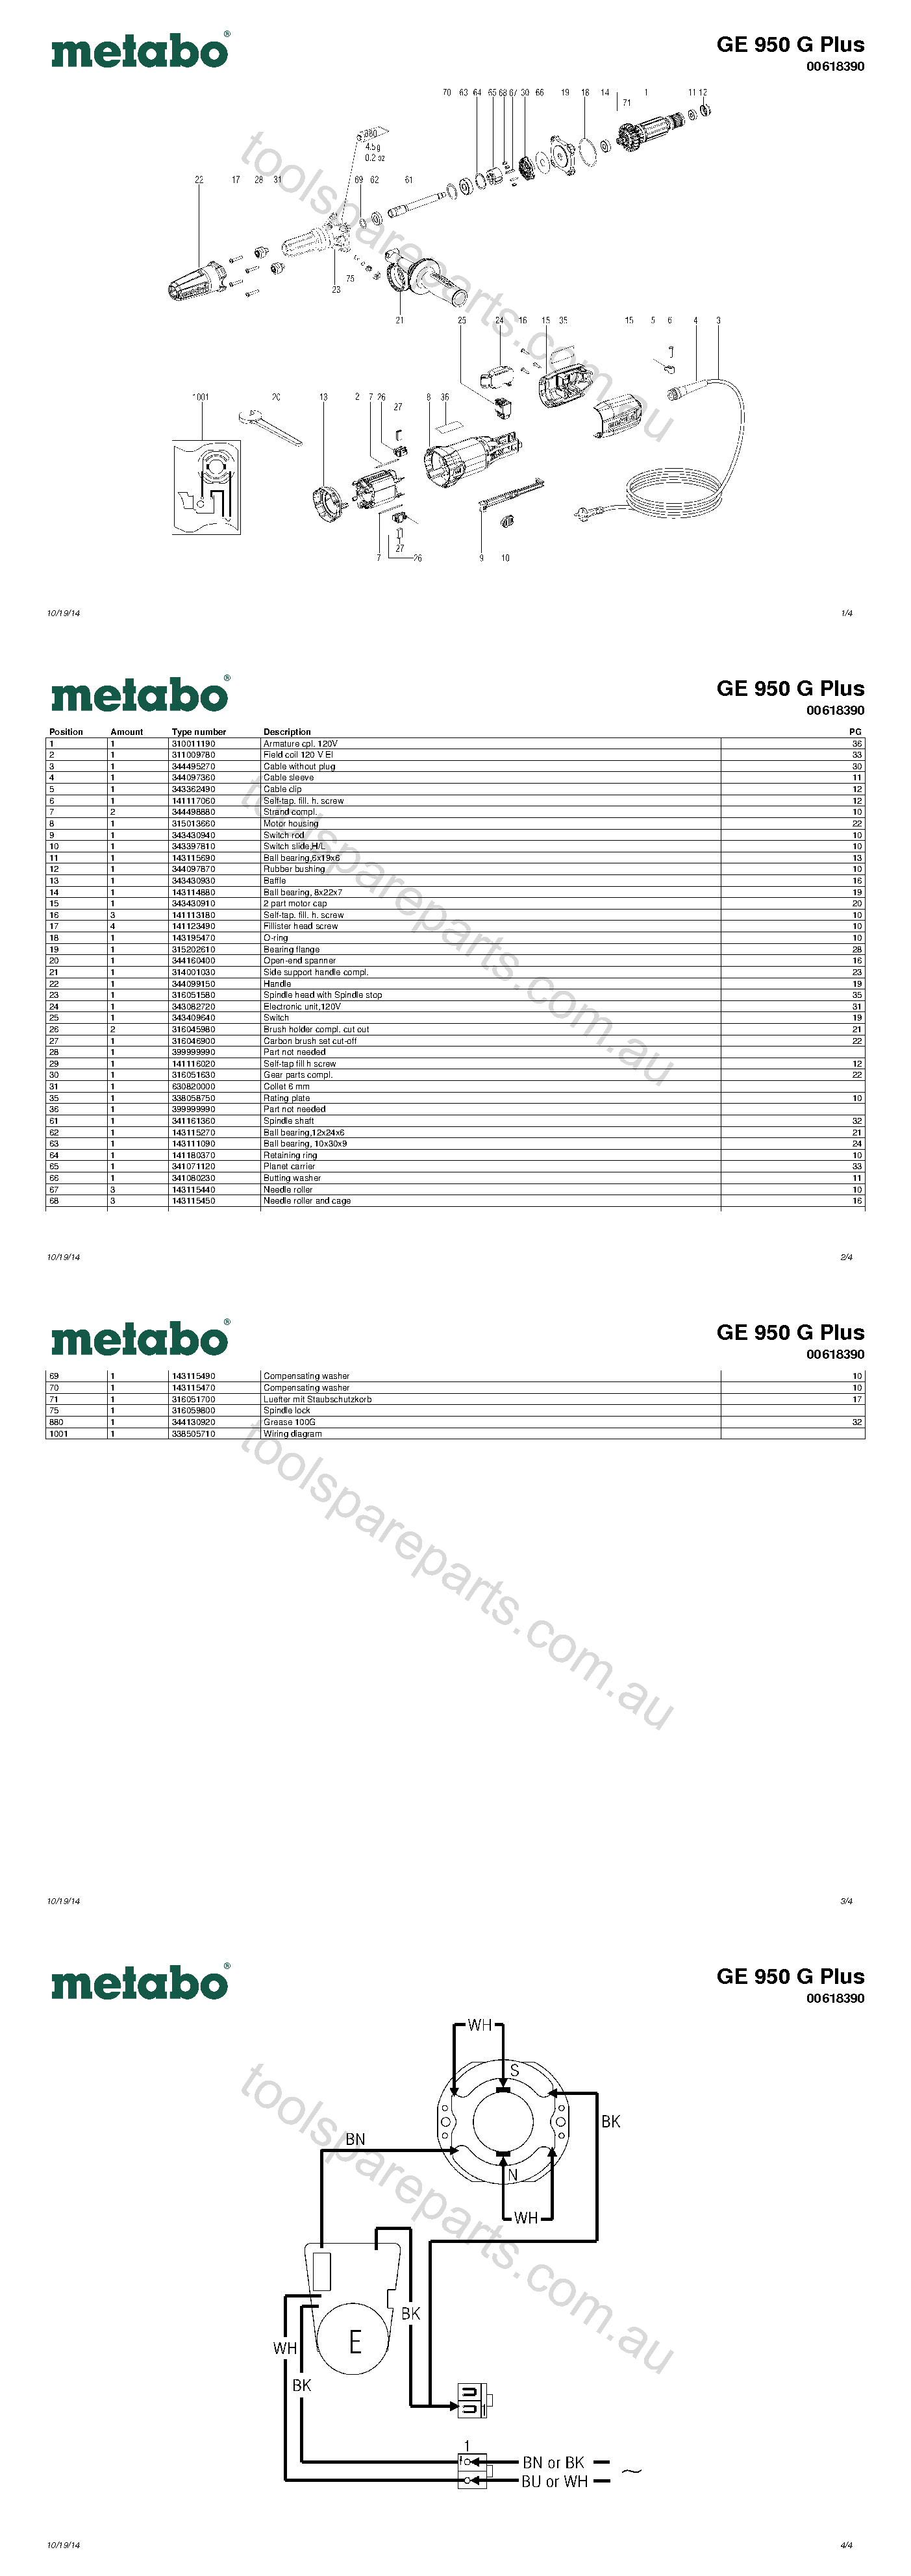 Metabo GE 950 G Plus 00618390  Diagram 1